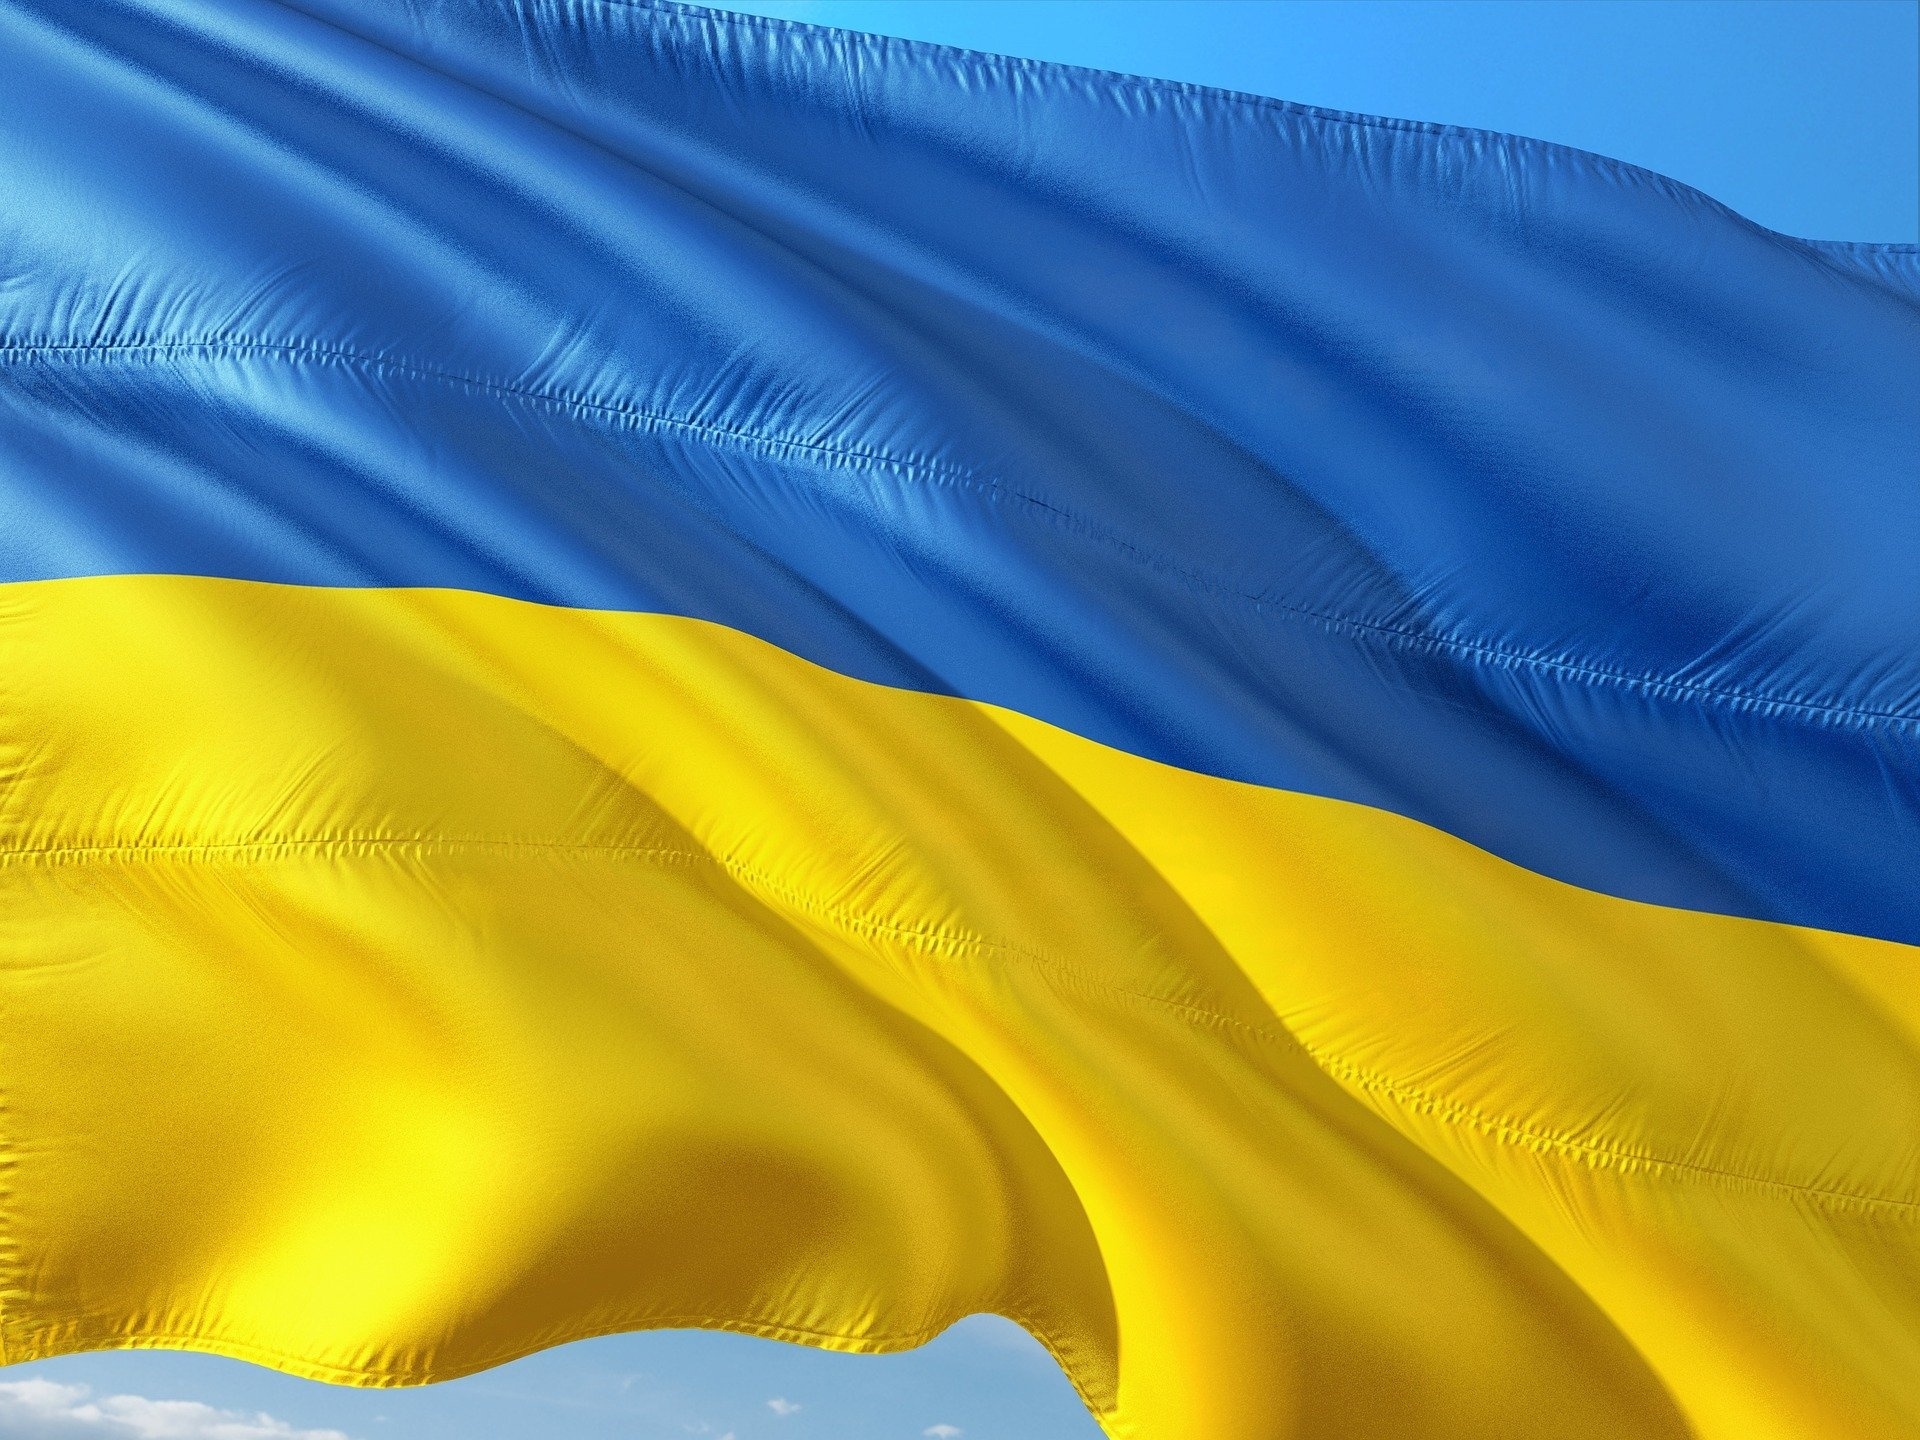 Ukraine flag - blue and yellow horizontal stripes